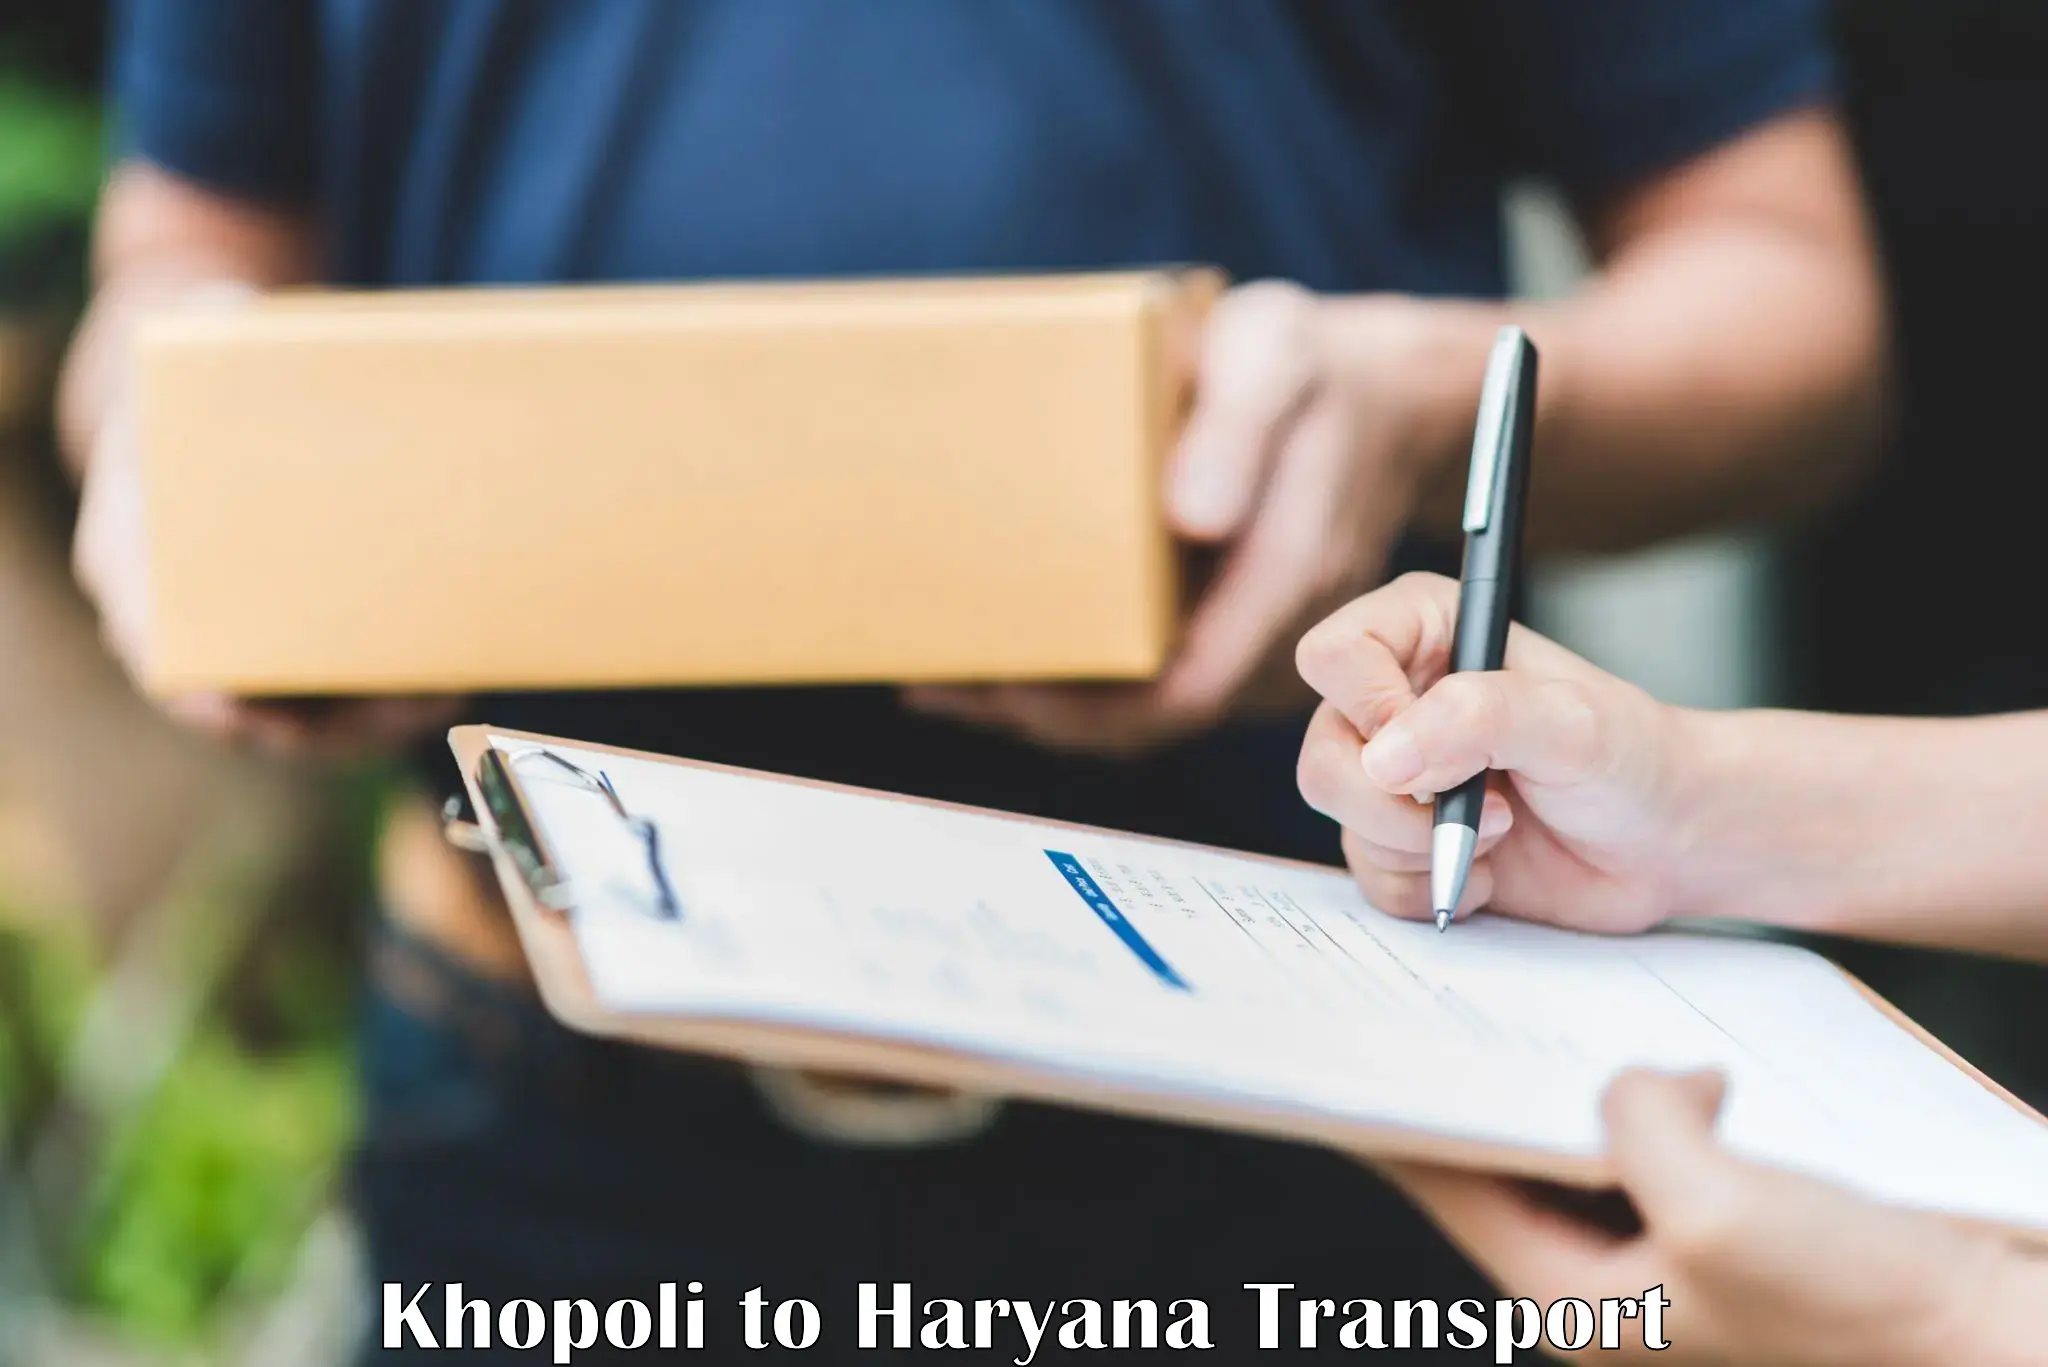 Transport in sharing Khopoli to Haryana